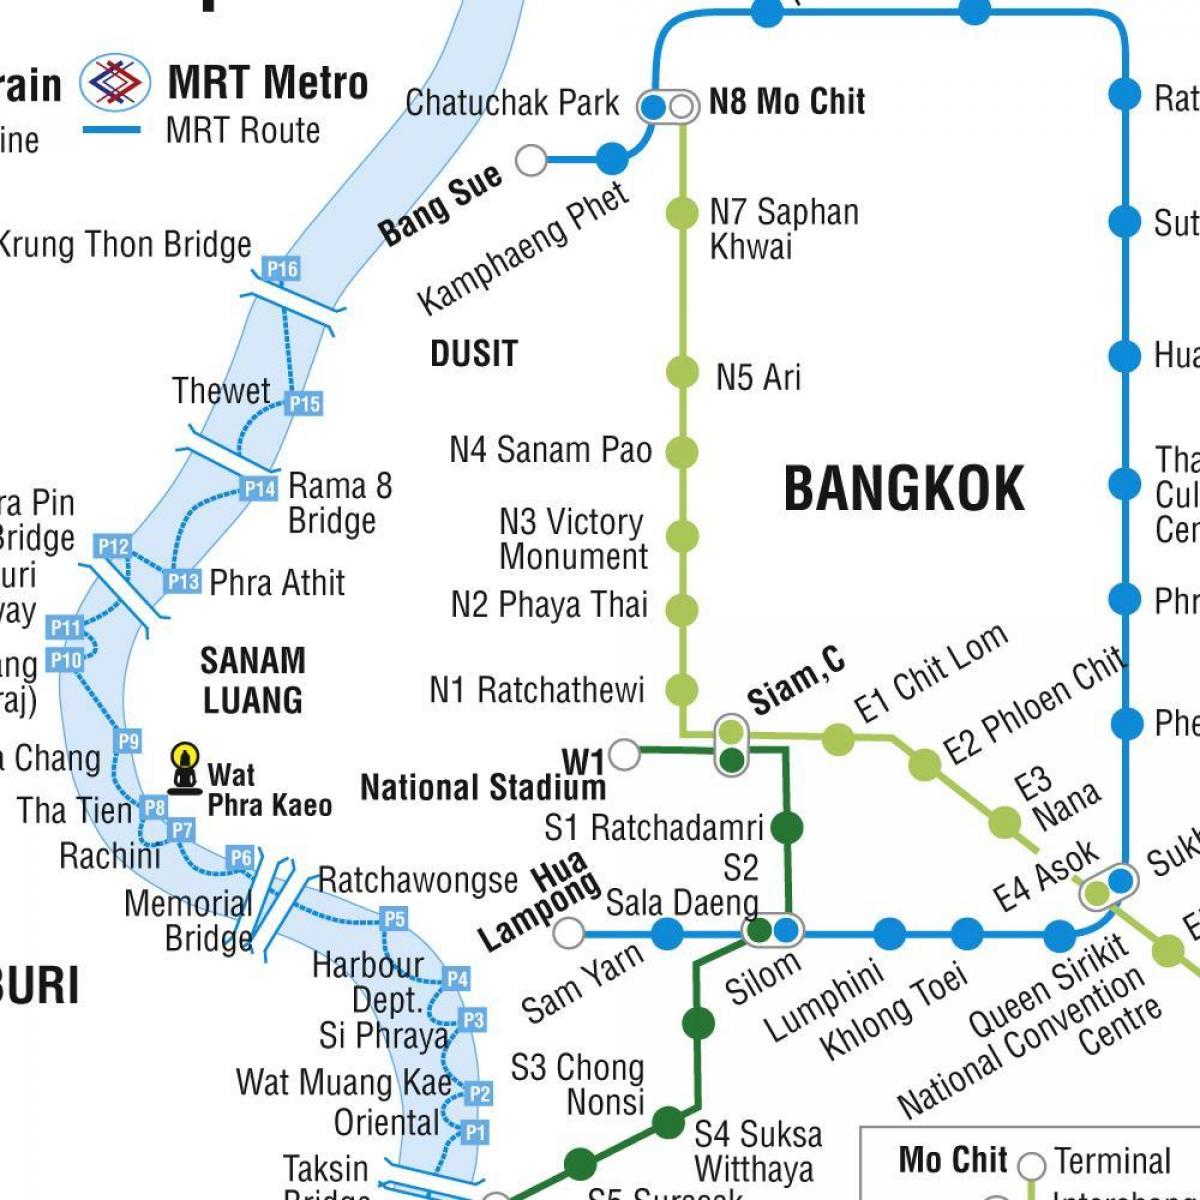 зураг бангкок метро, skytrain